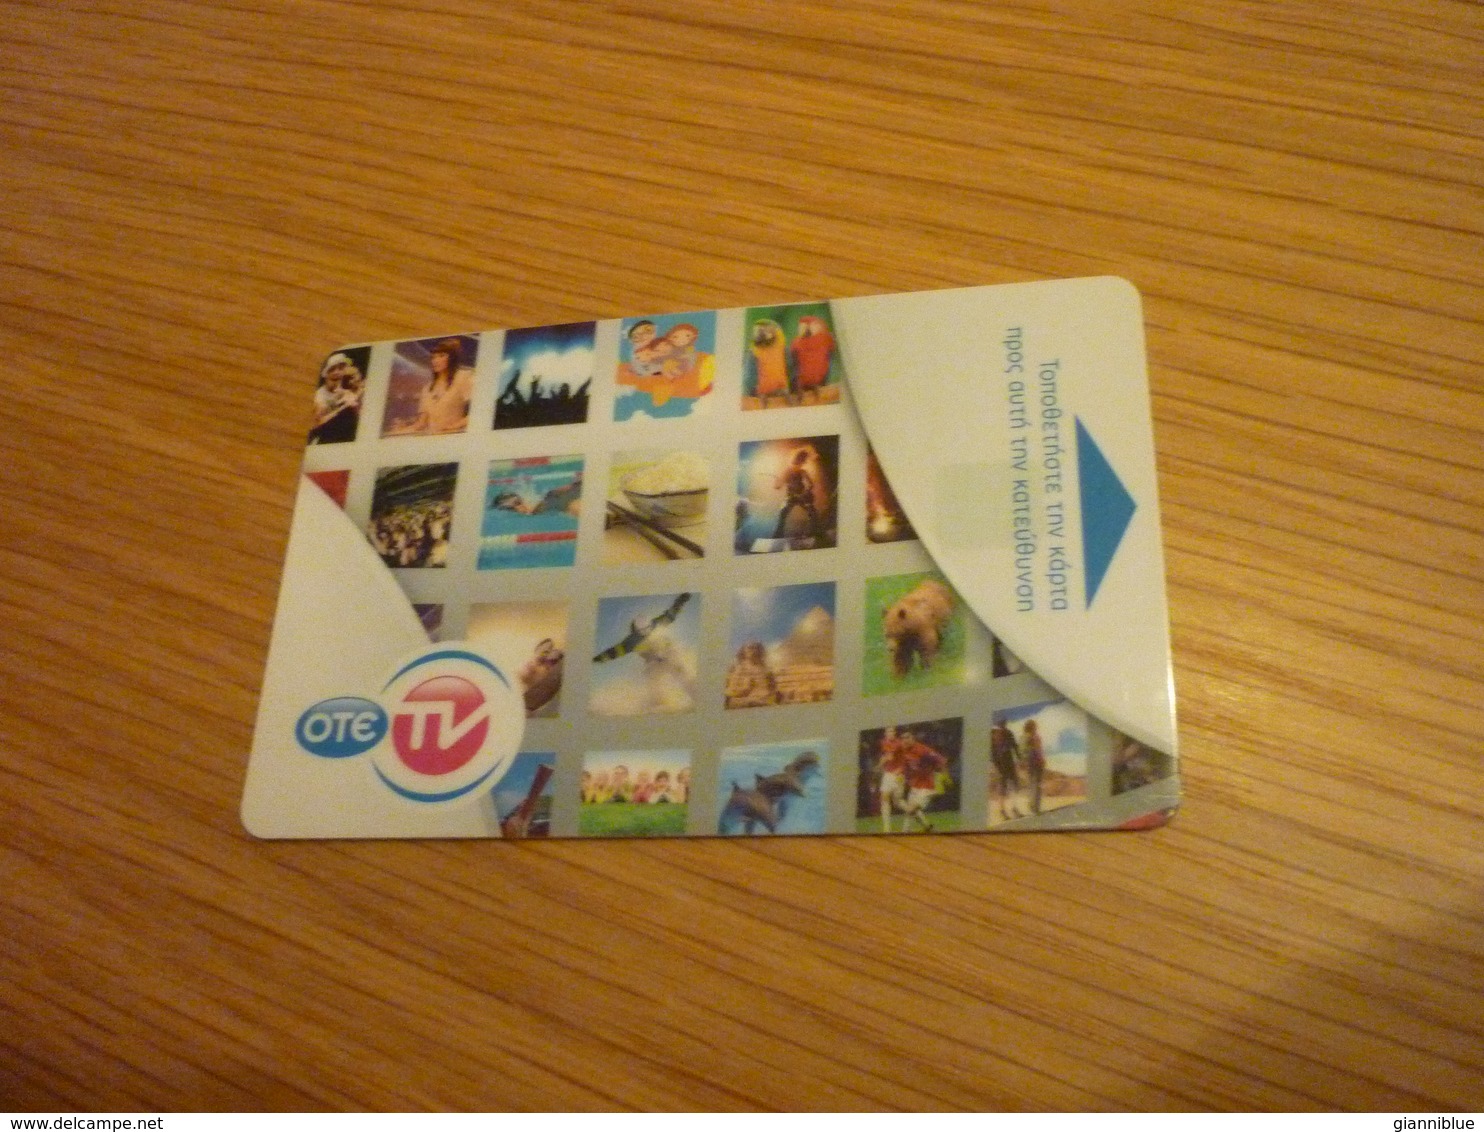 Greece OTE TV Television Digital Satellite Chip Card (version V UK) - Telekom-Betreiber